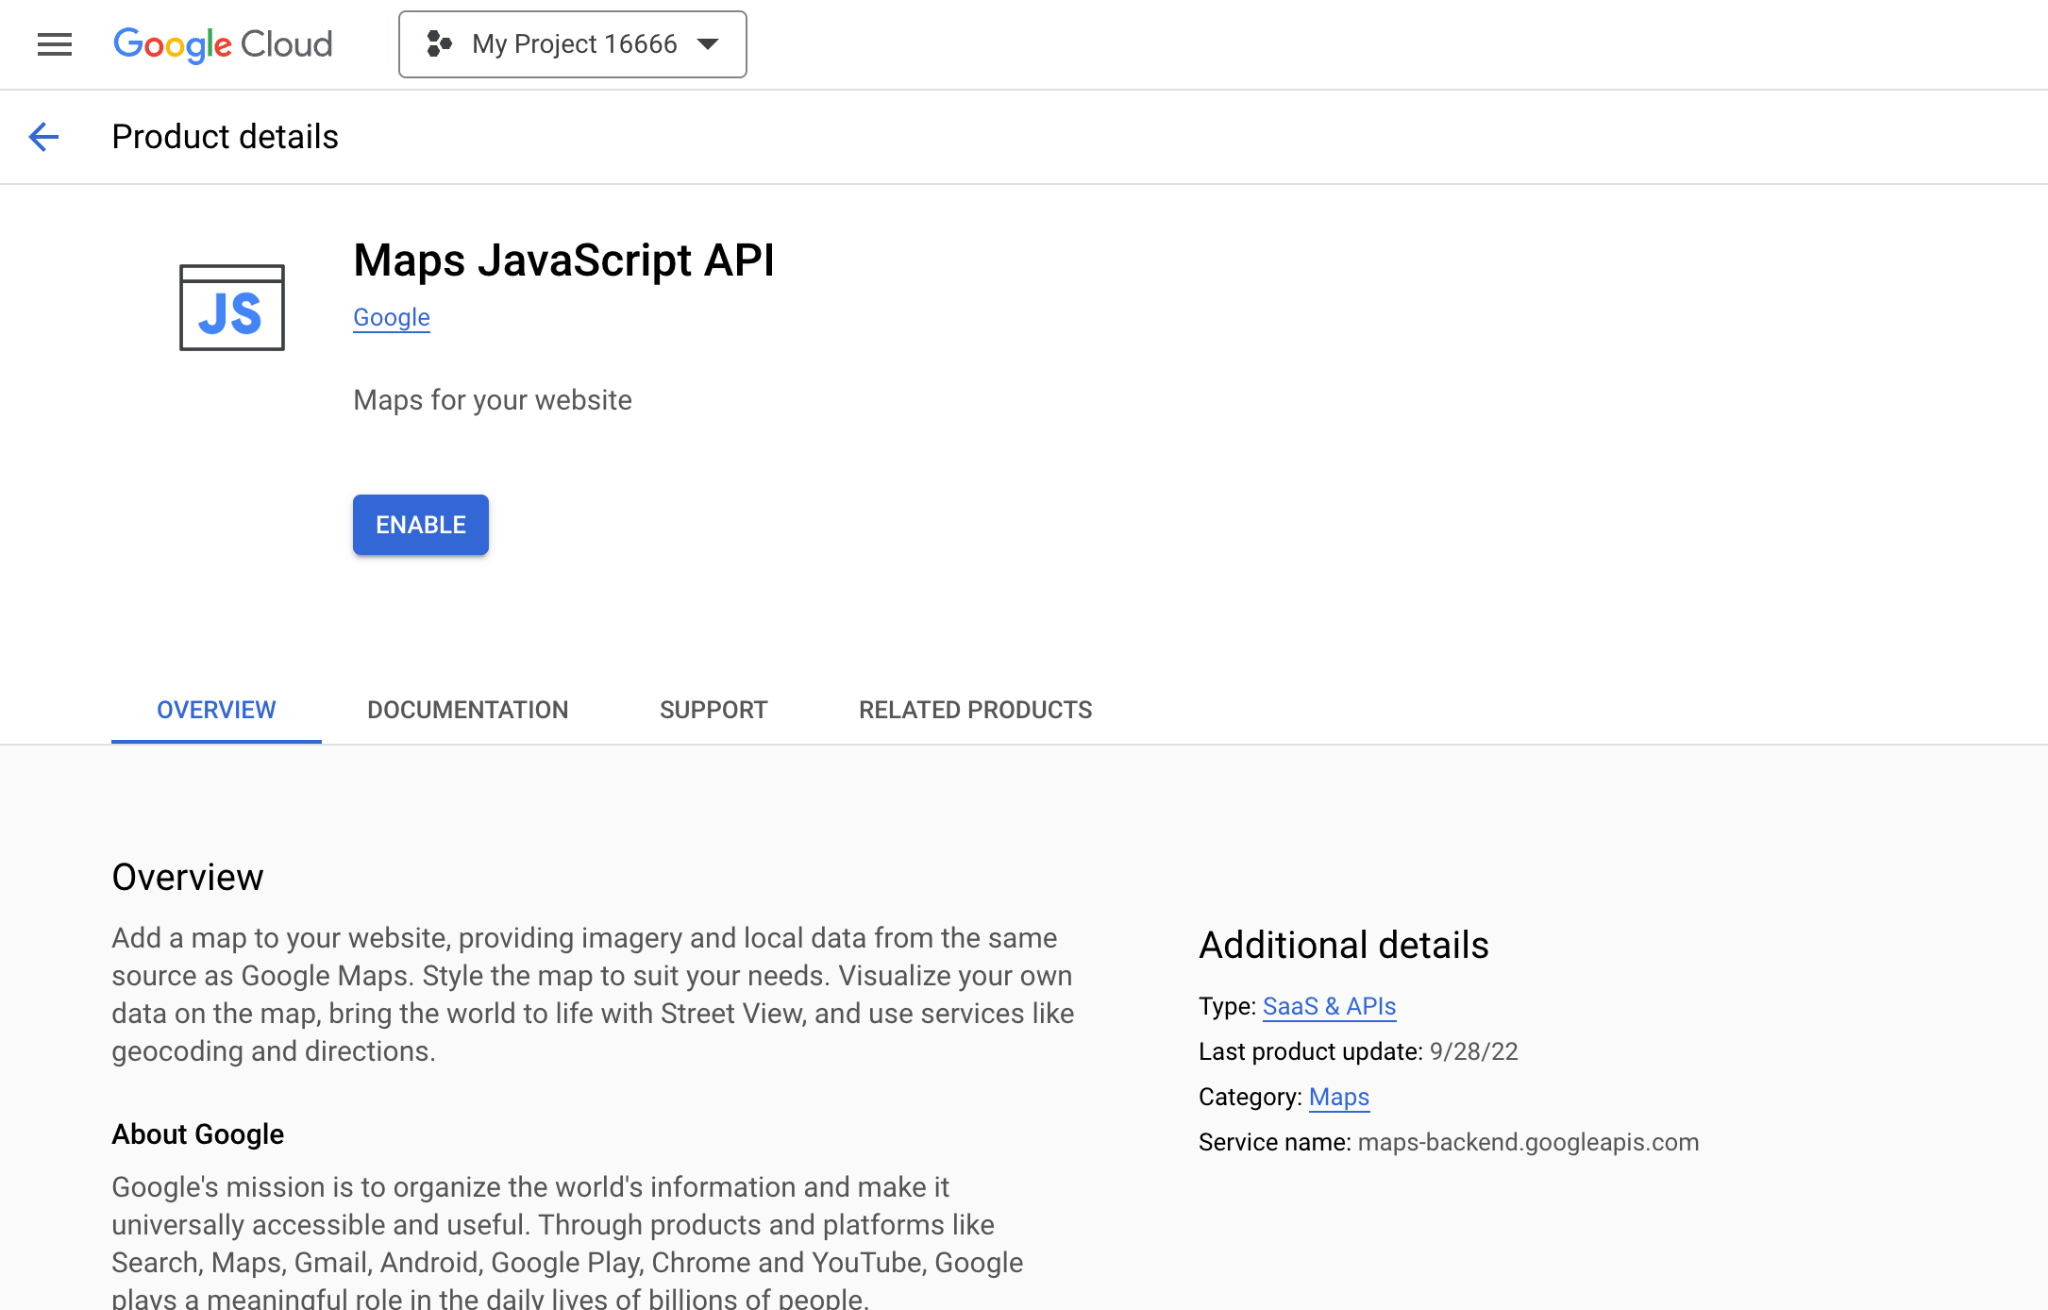 Maps JavaScript API product details